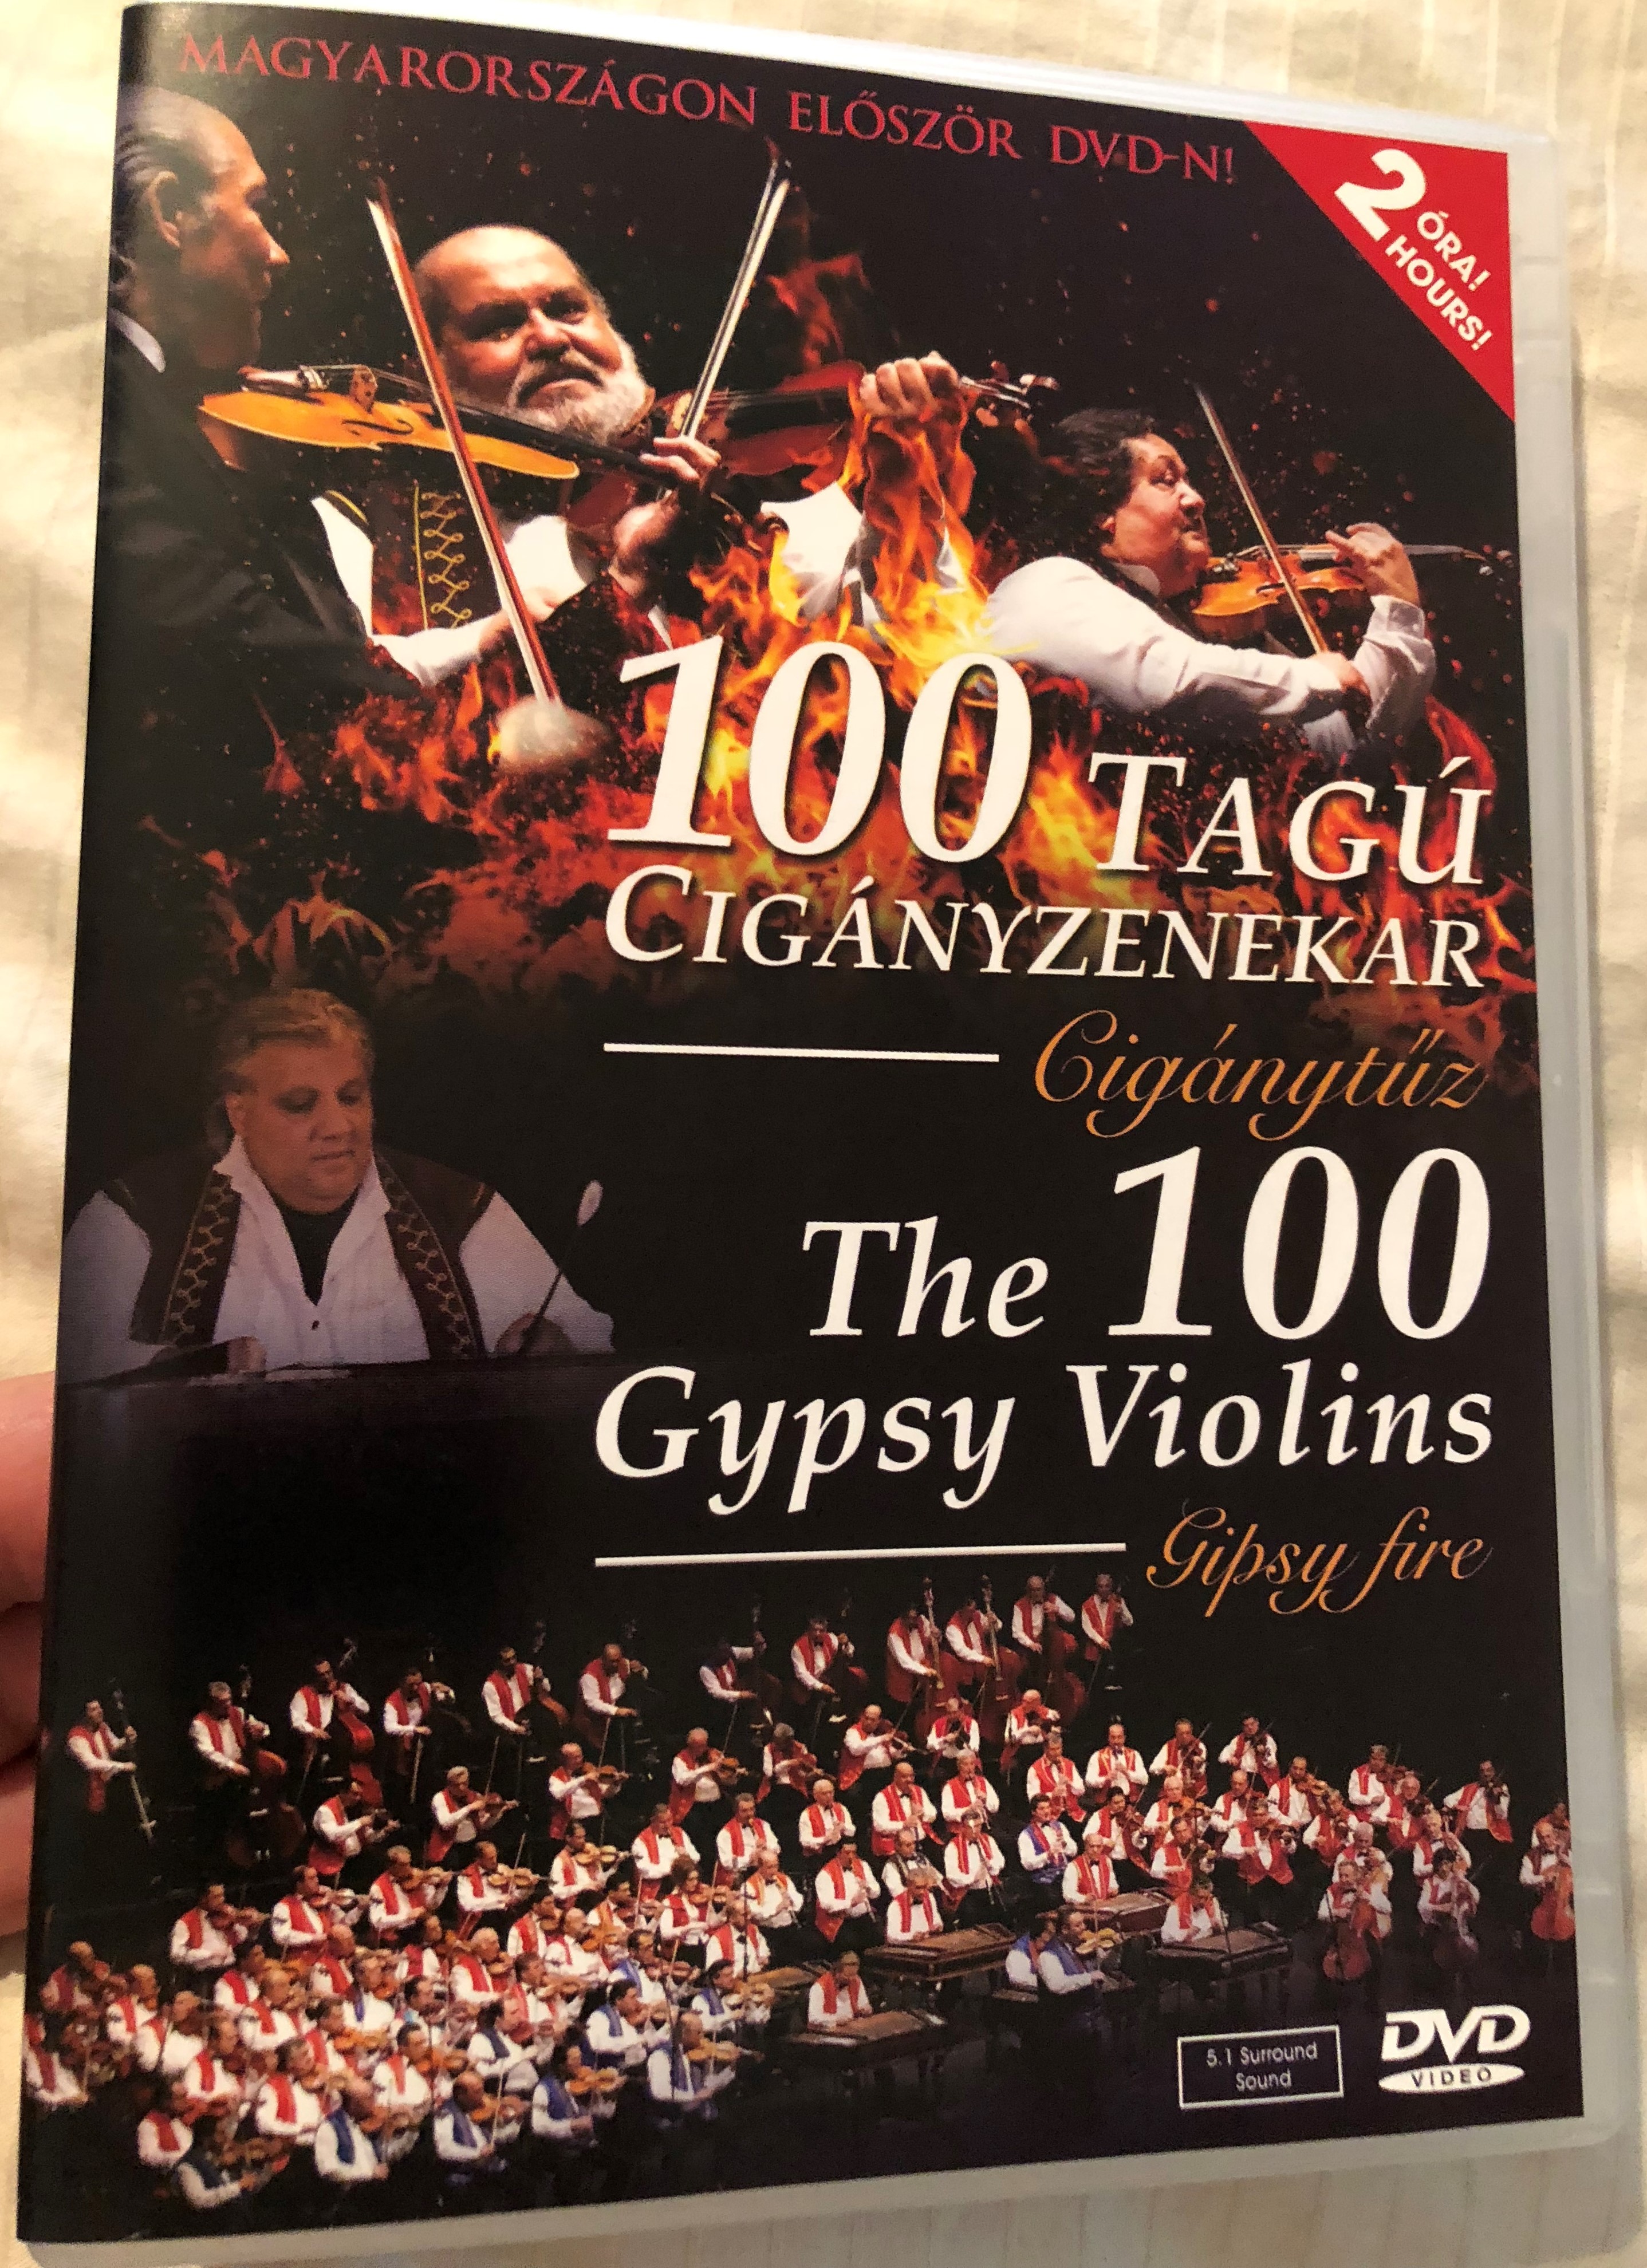 100-tag-cig-nyzenekar-cig-nyt-z-dvd-2008-the-100-gypsy-violins-gypsy-fire-directed-by-m-rton-s-ndor-1-.jpg